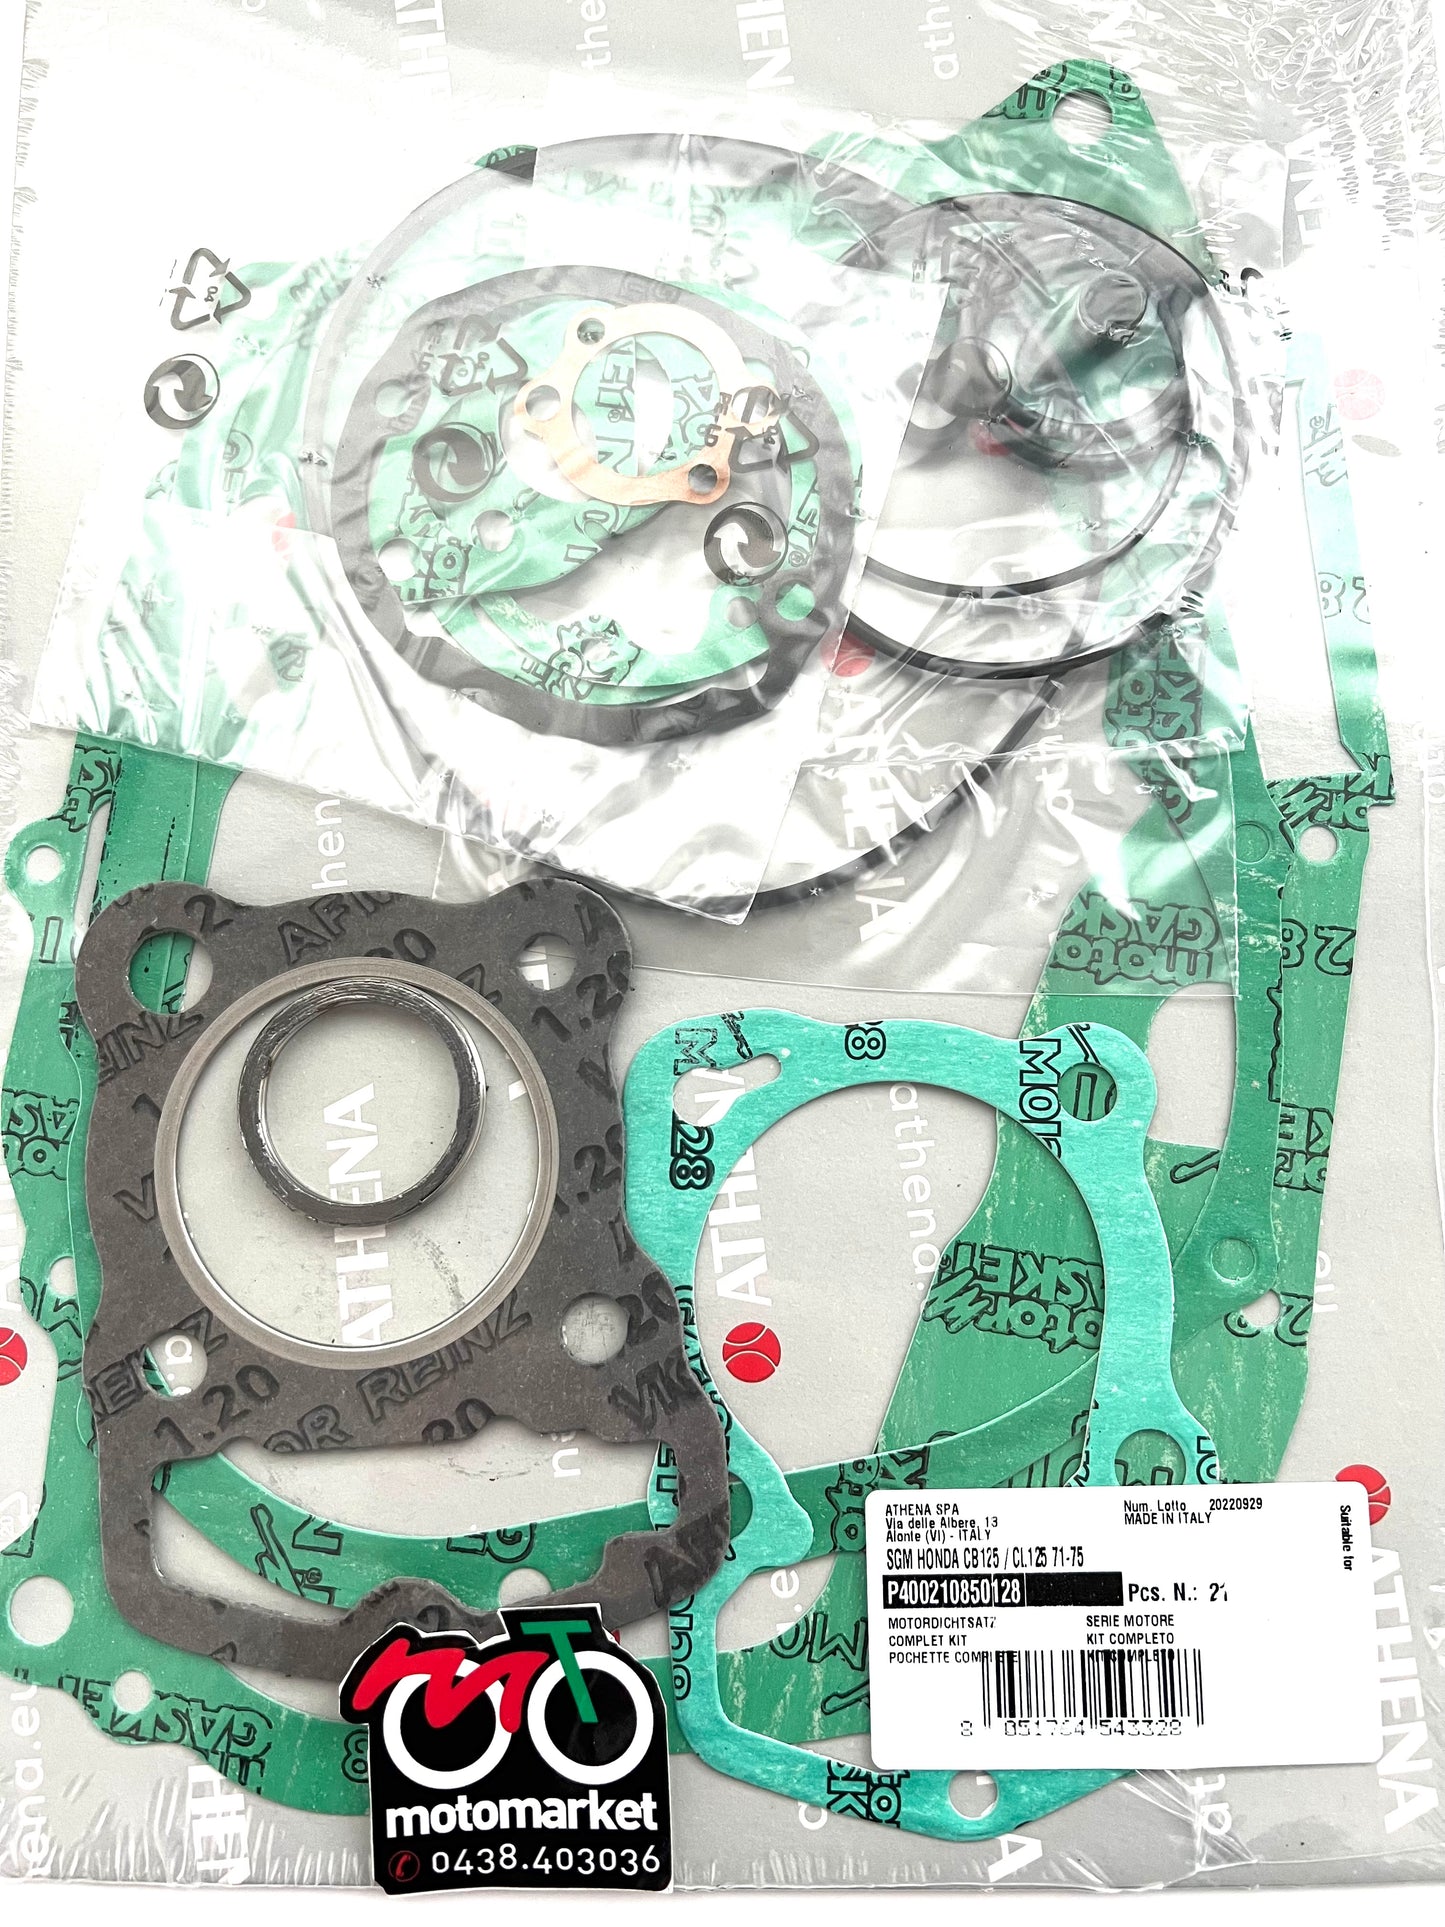 Guarnizioni motore Honda CB125-XL125S art.P400210850128